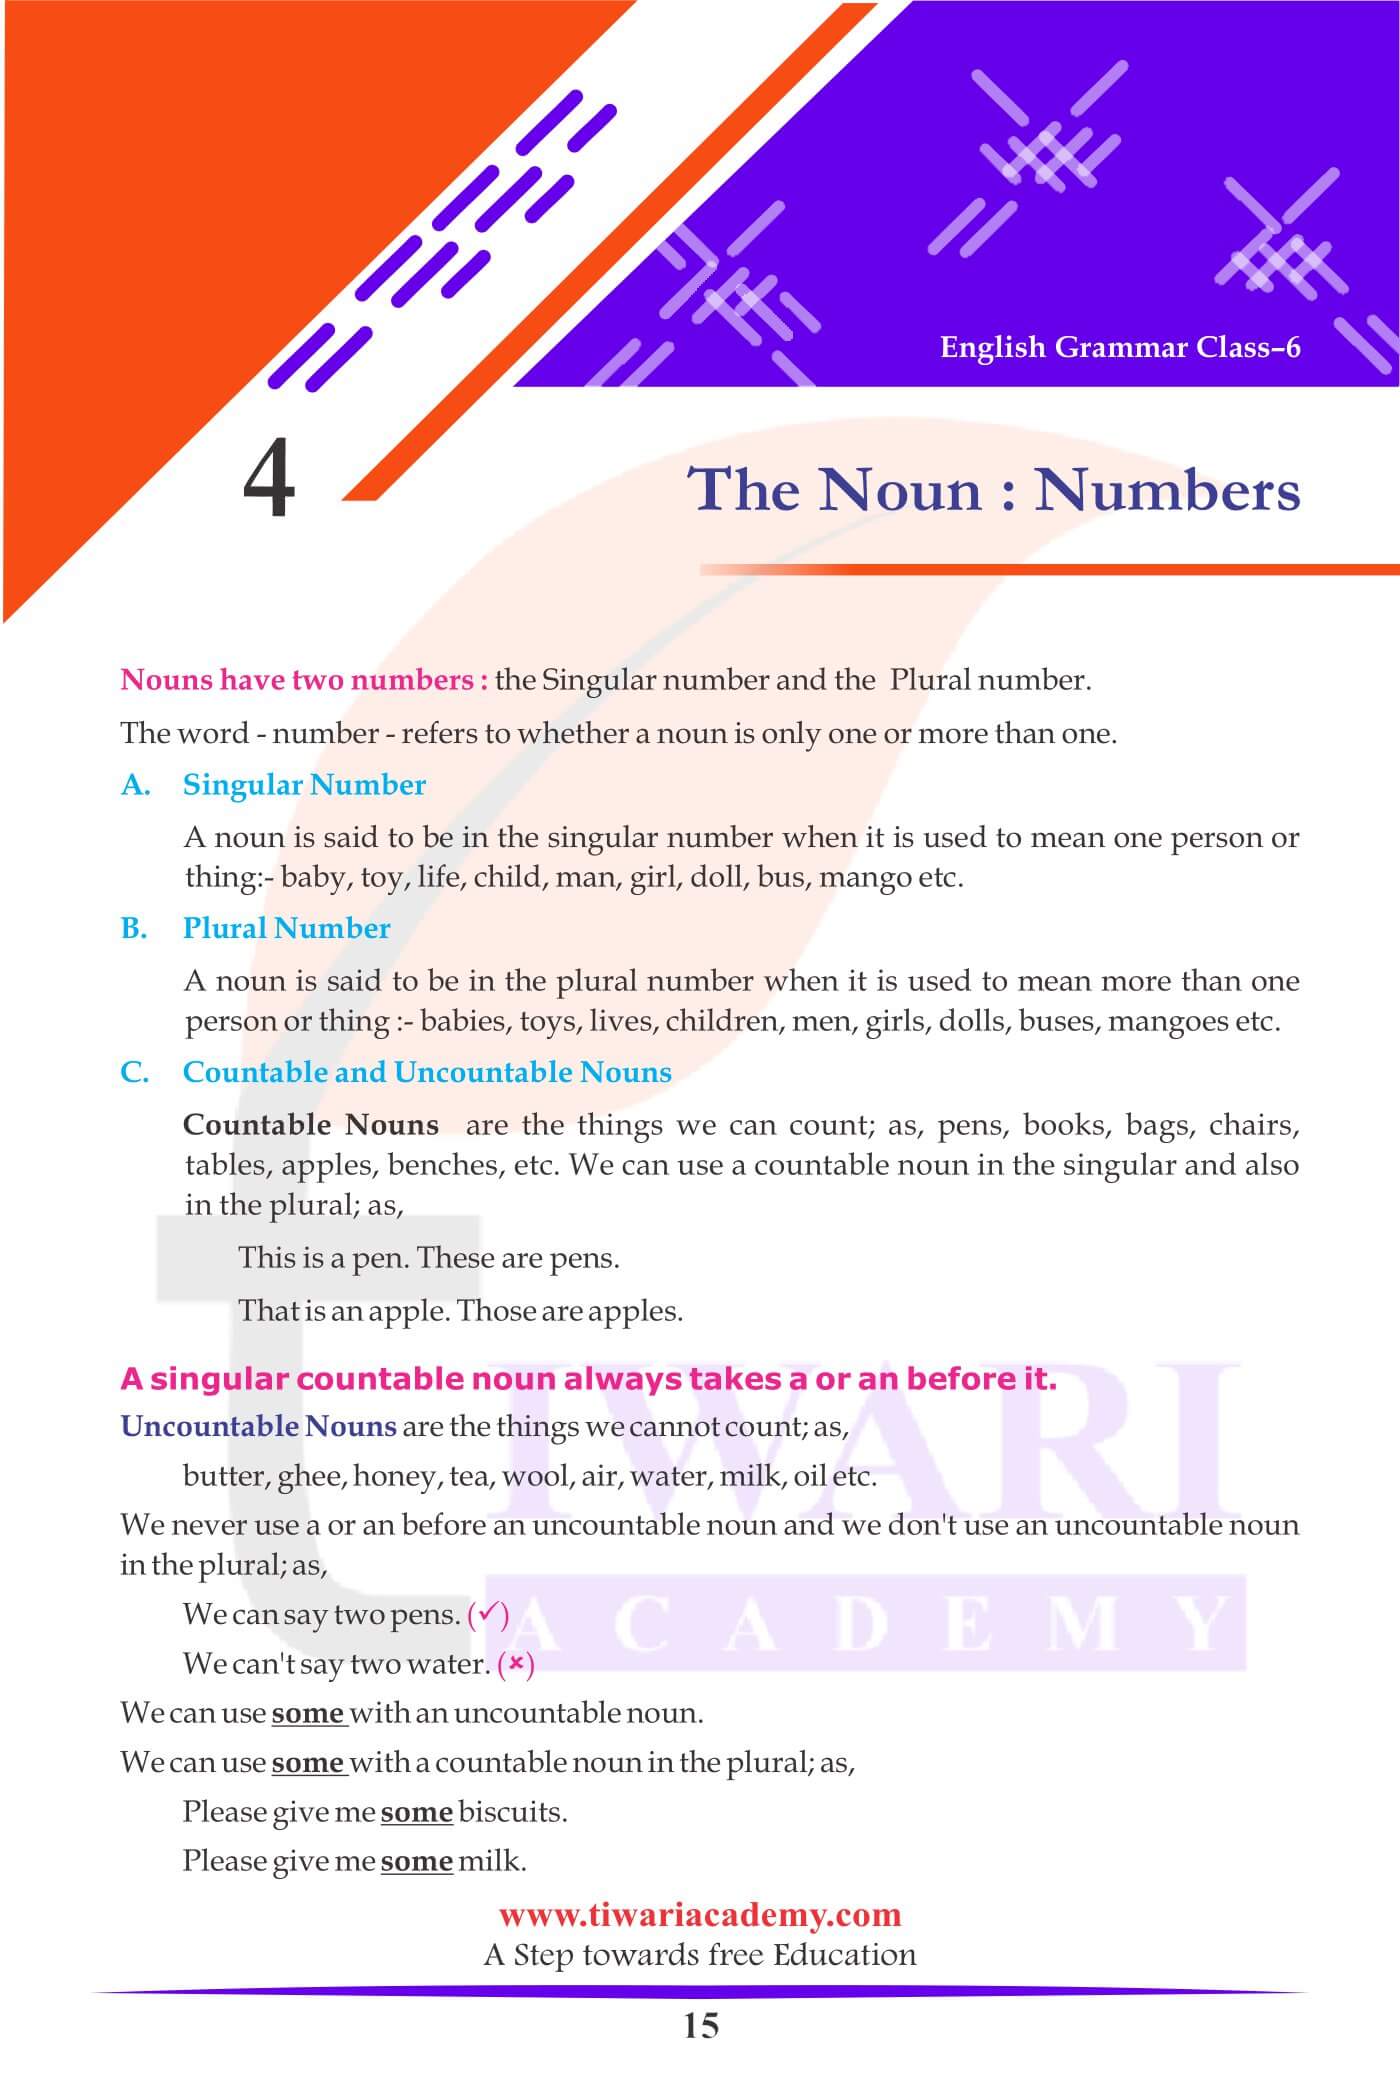 Class 6 English Grammar Chapter 4 The Noun Numbers